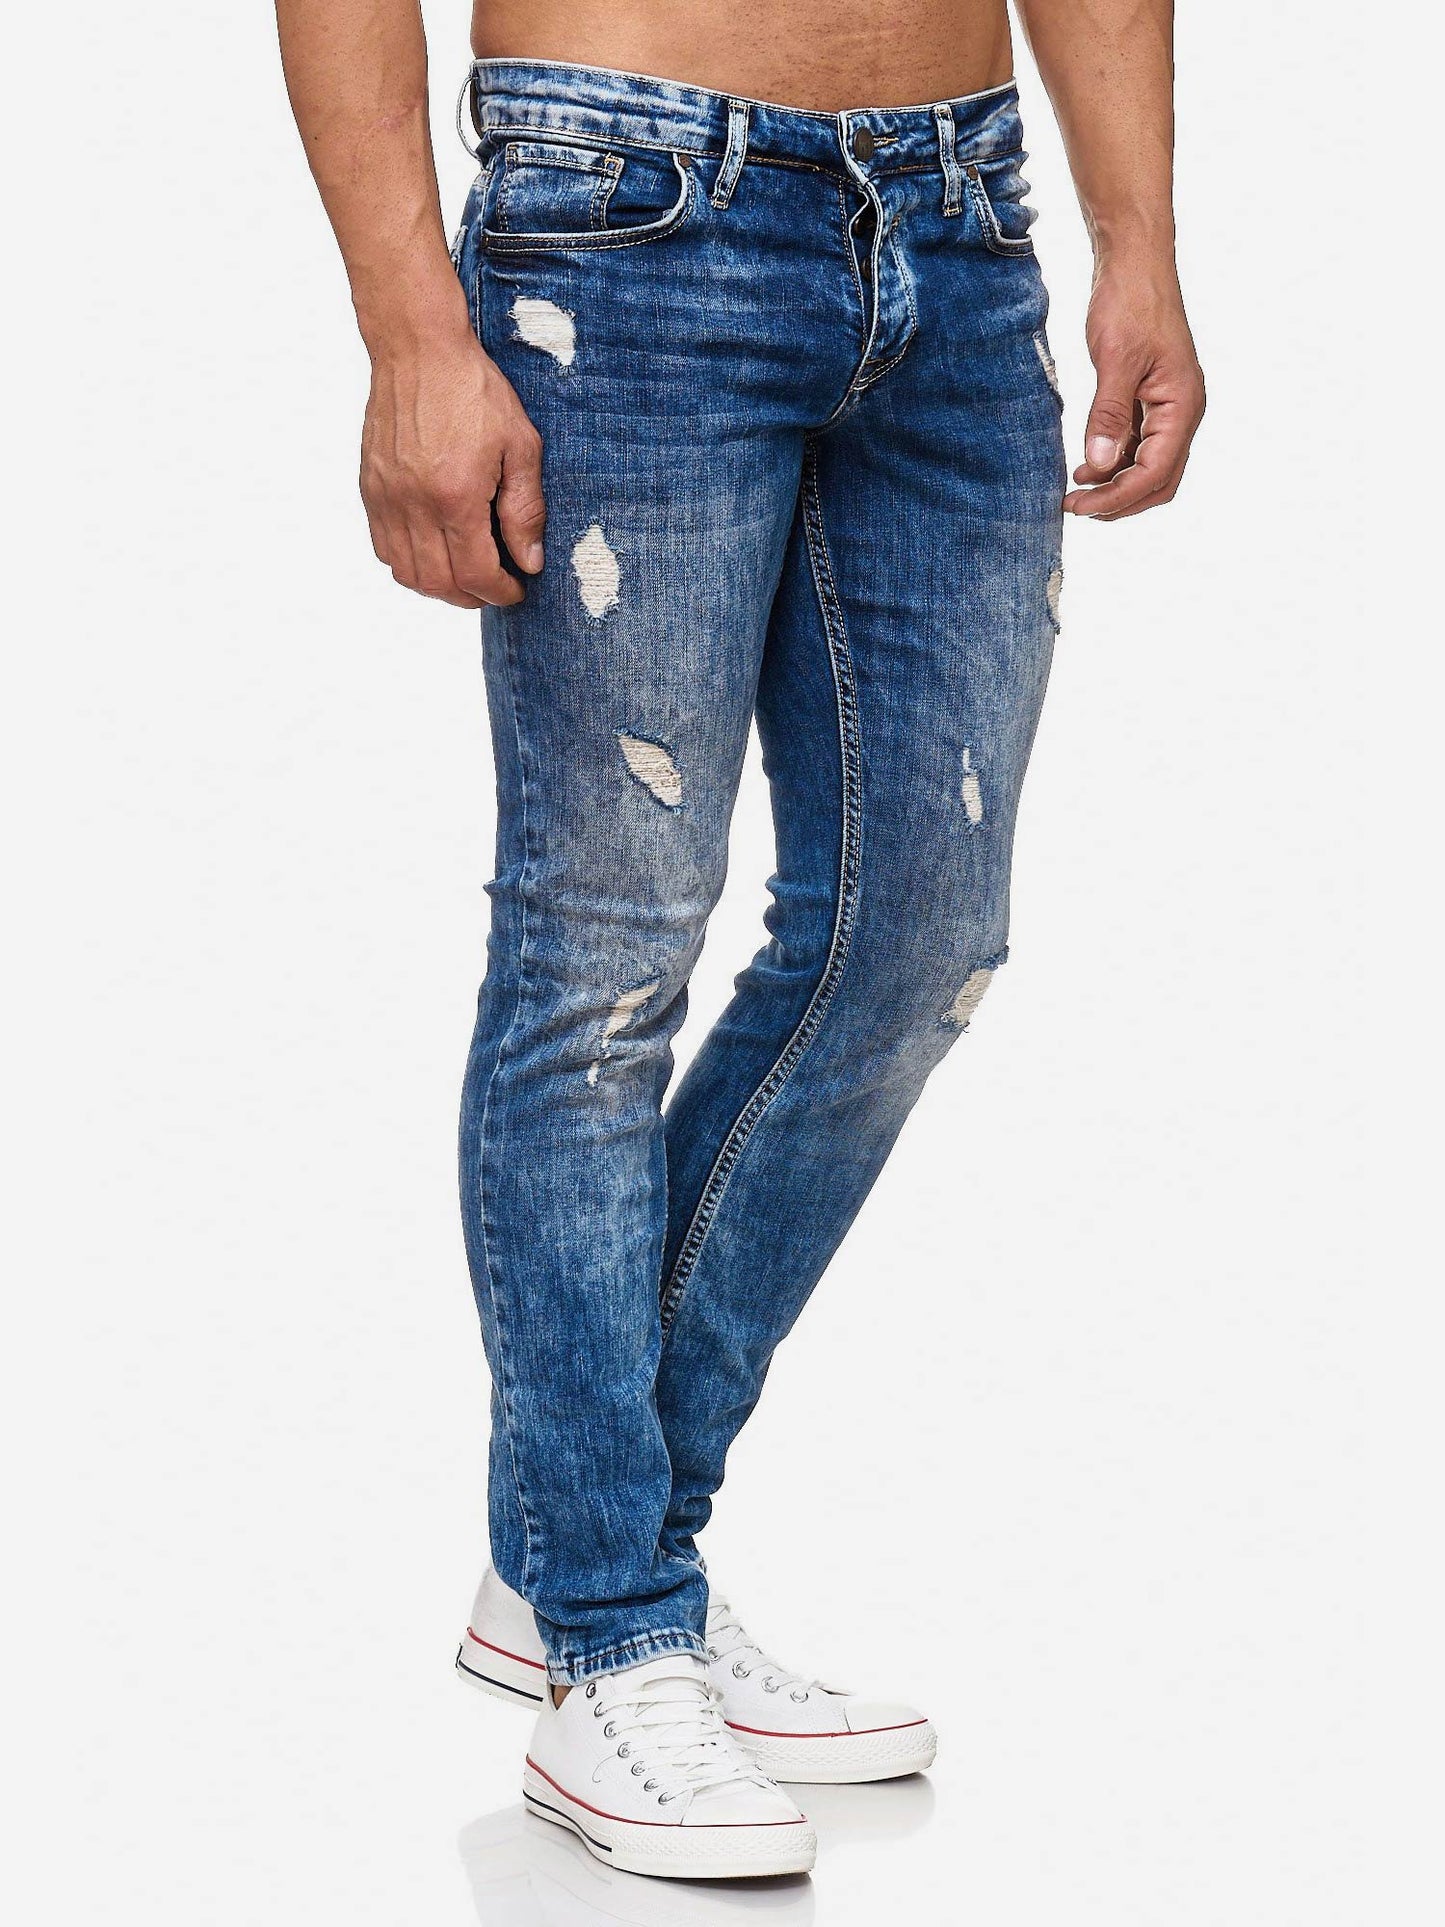 Tazzio Herren Jeans Slim Fit im Destroyed Look 17502